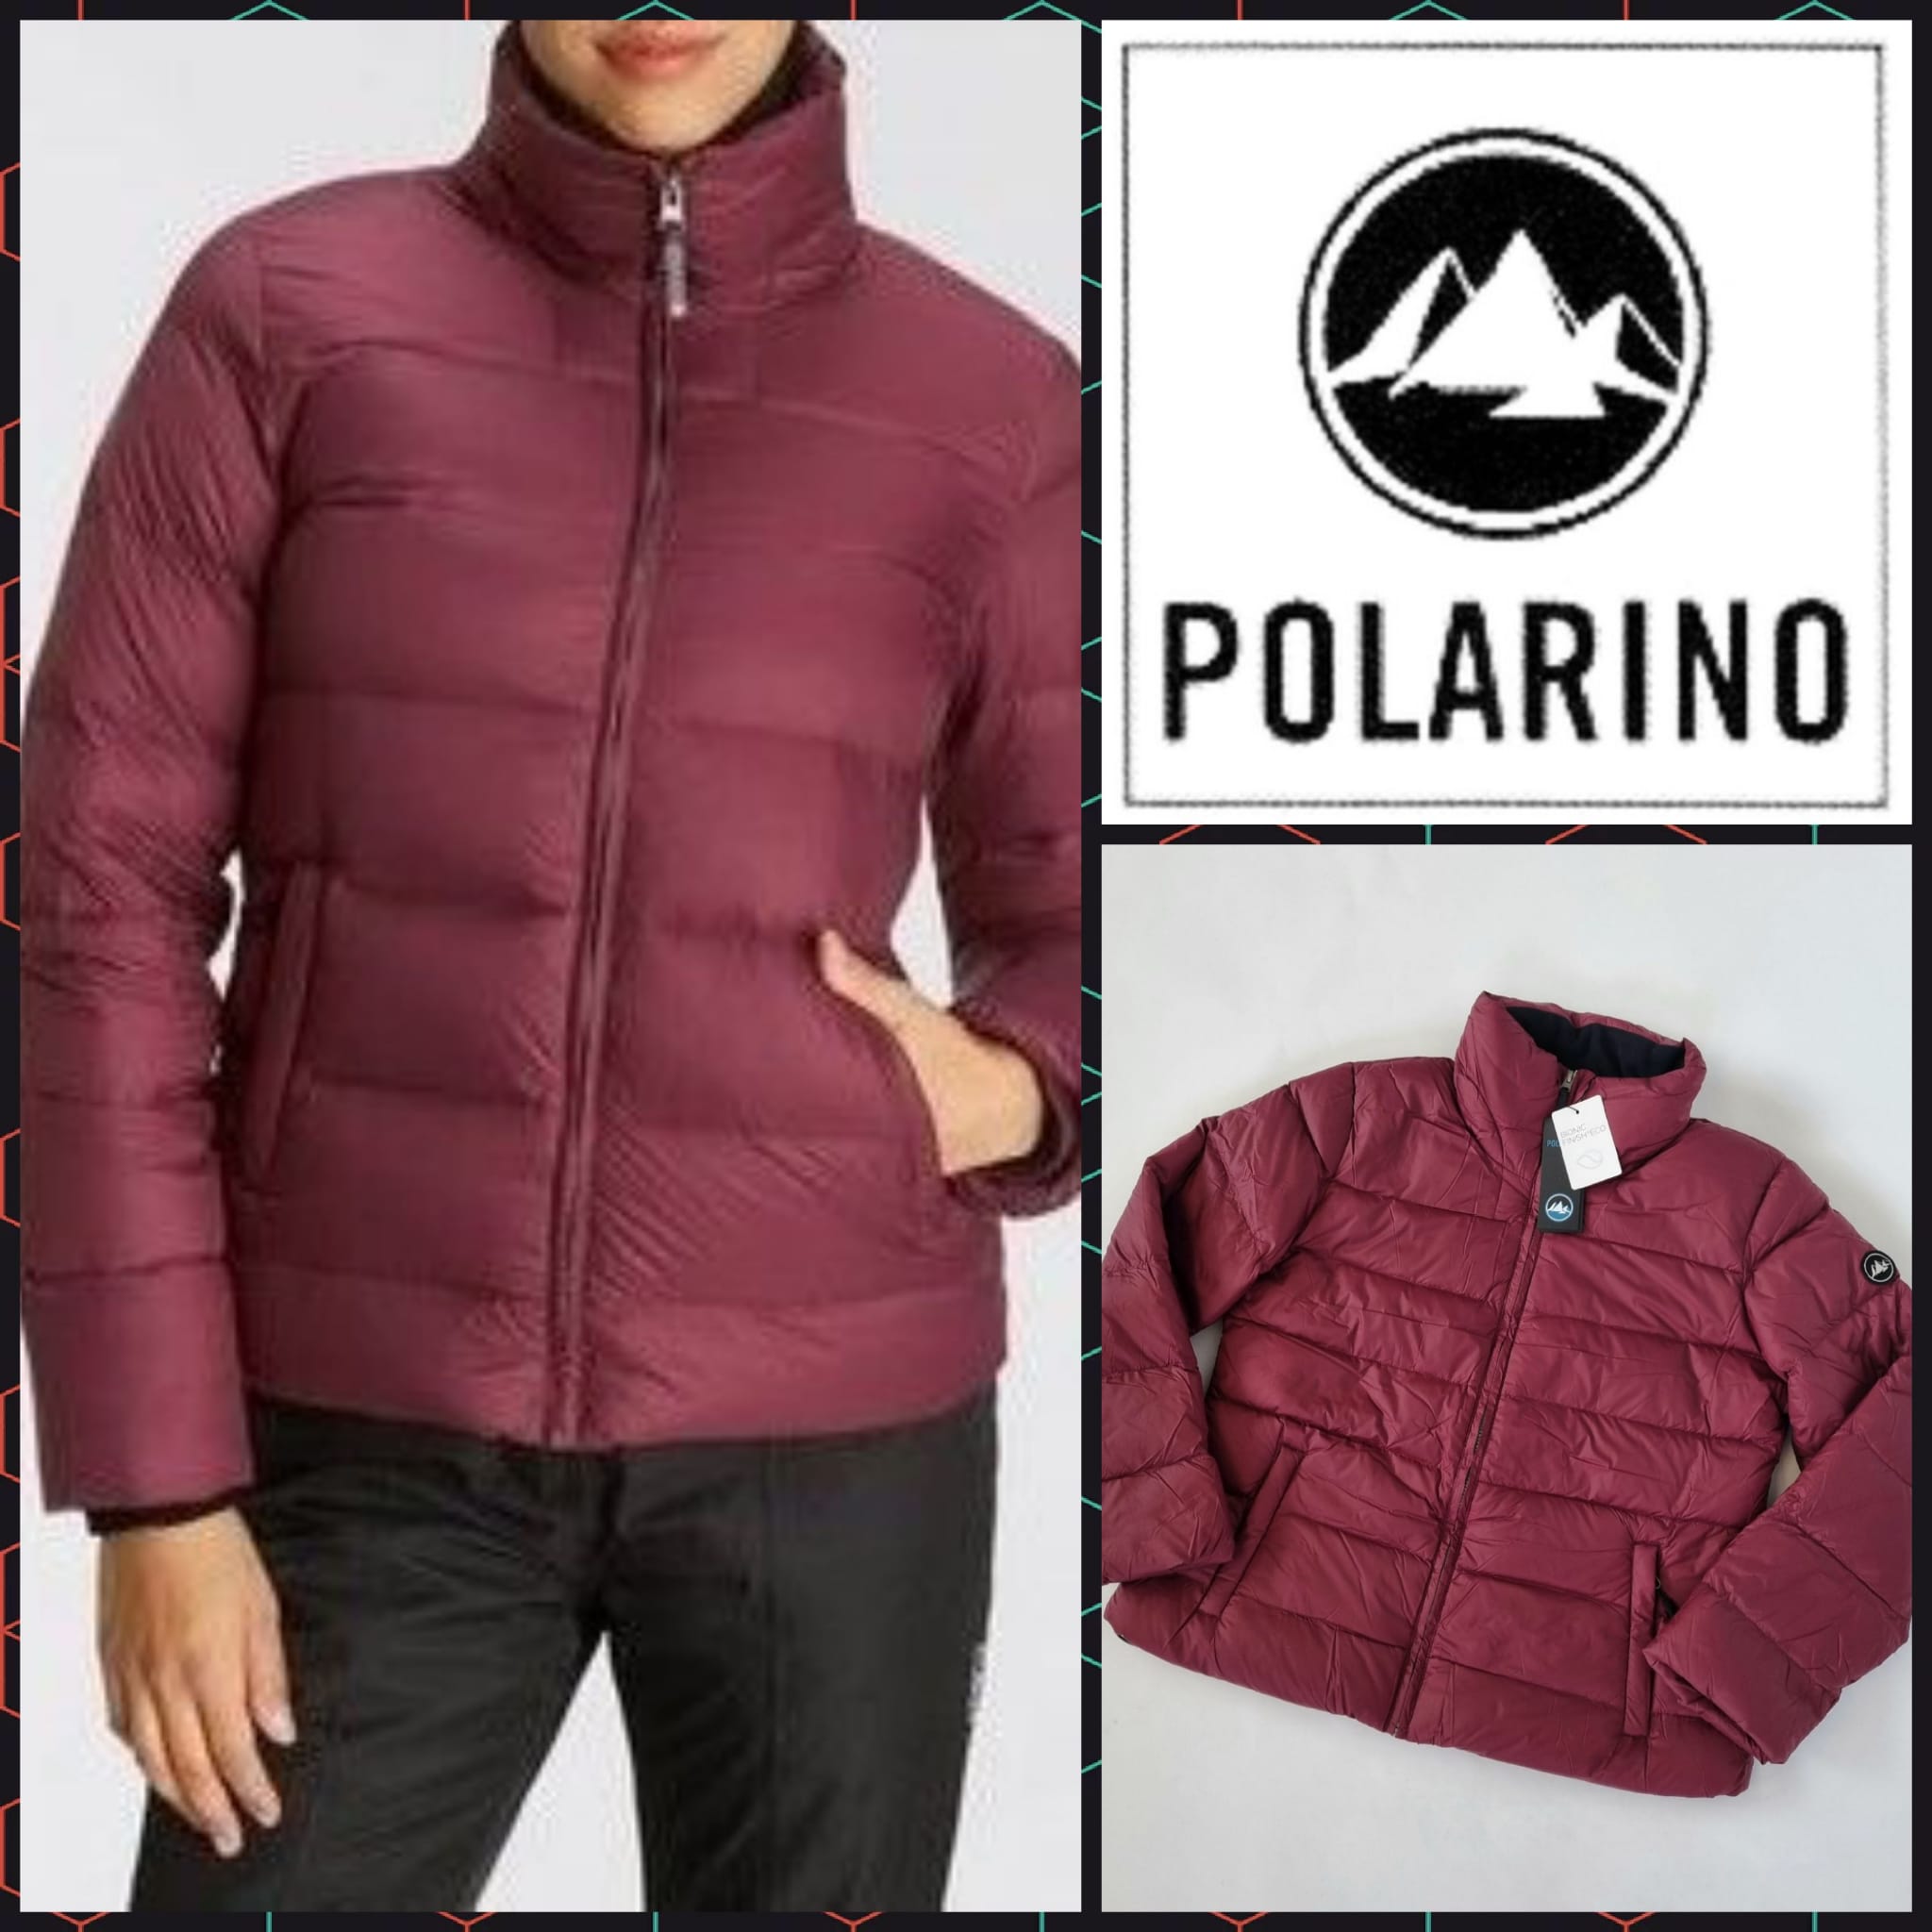 Natural women's down jackets from Polarino